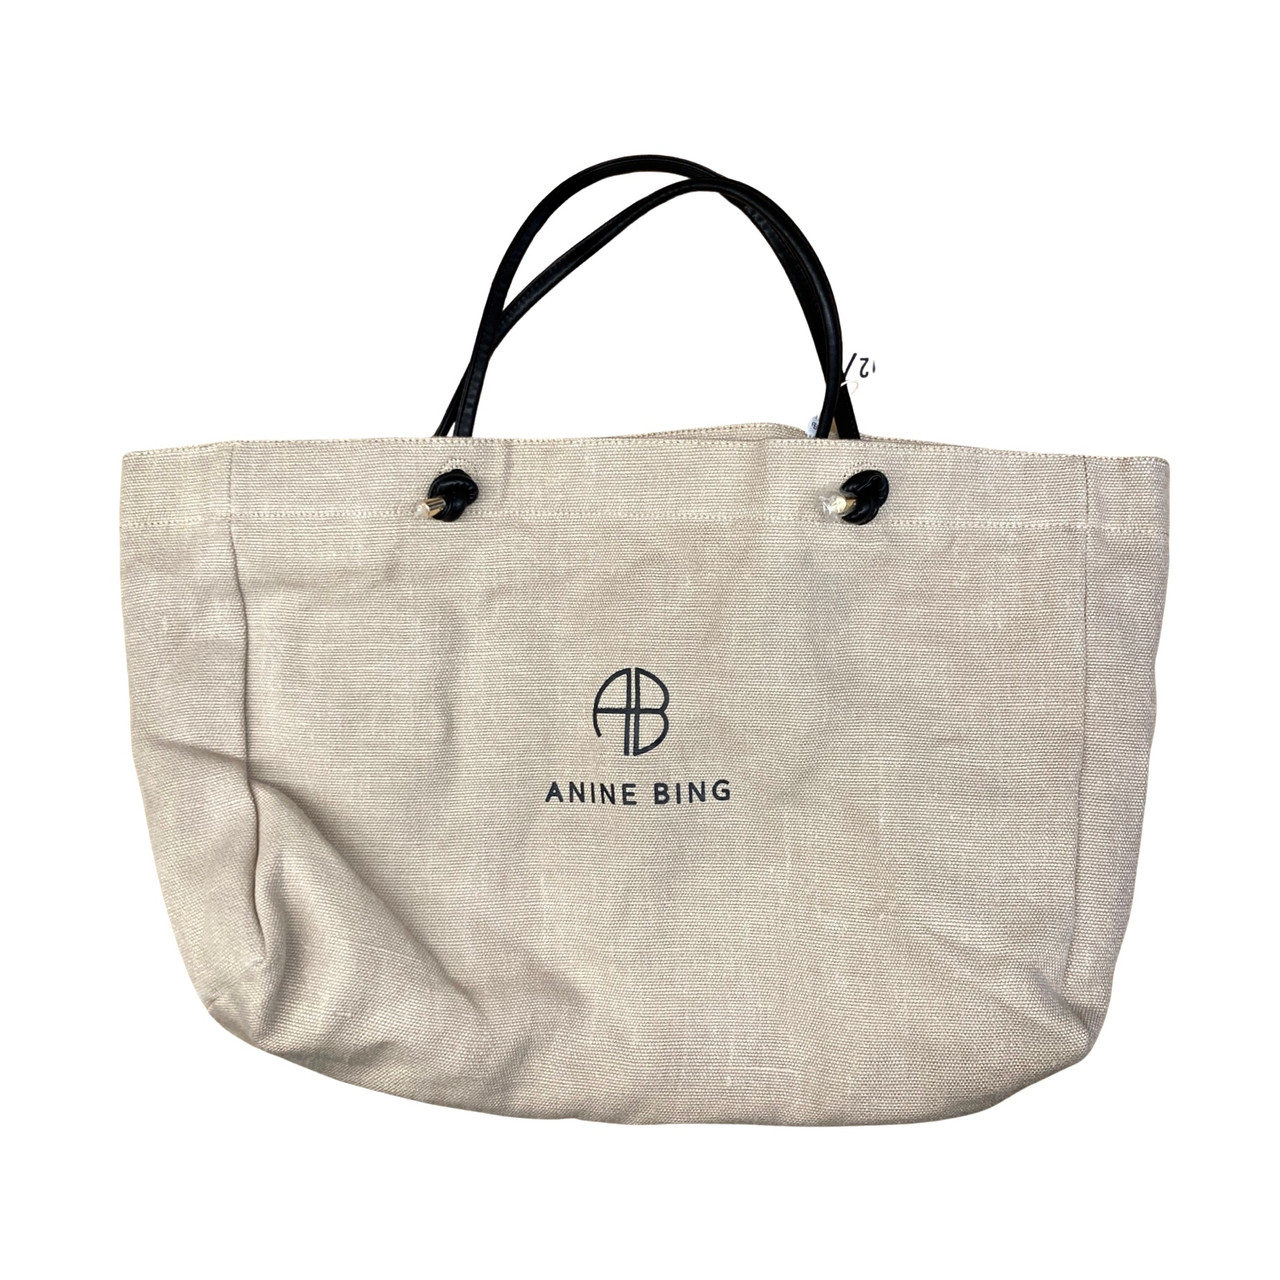 Anine Bing, Bags